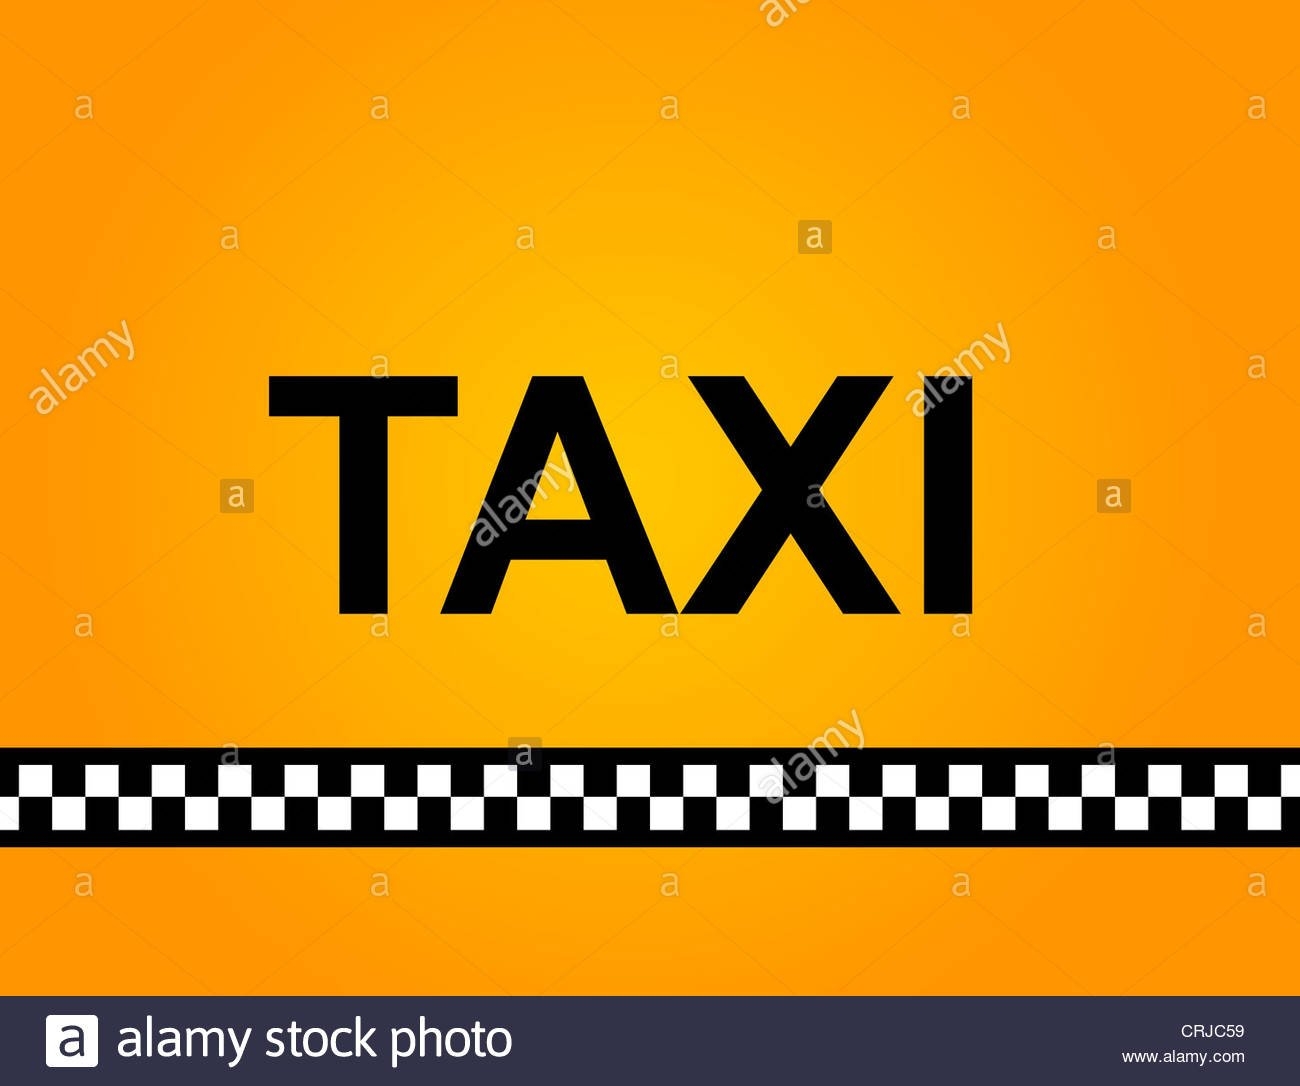 Art mos taxi login. Знак такси. Надпись такси. Желтая табличка такси. Taxi надпись.